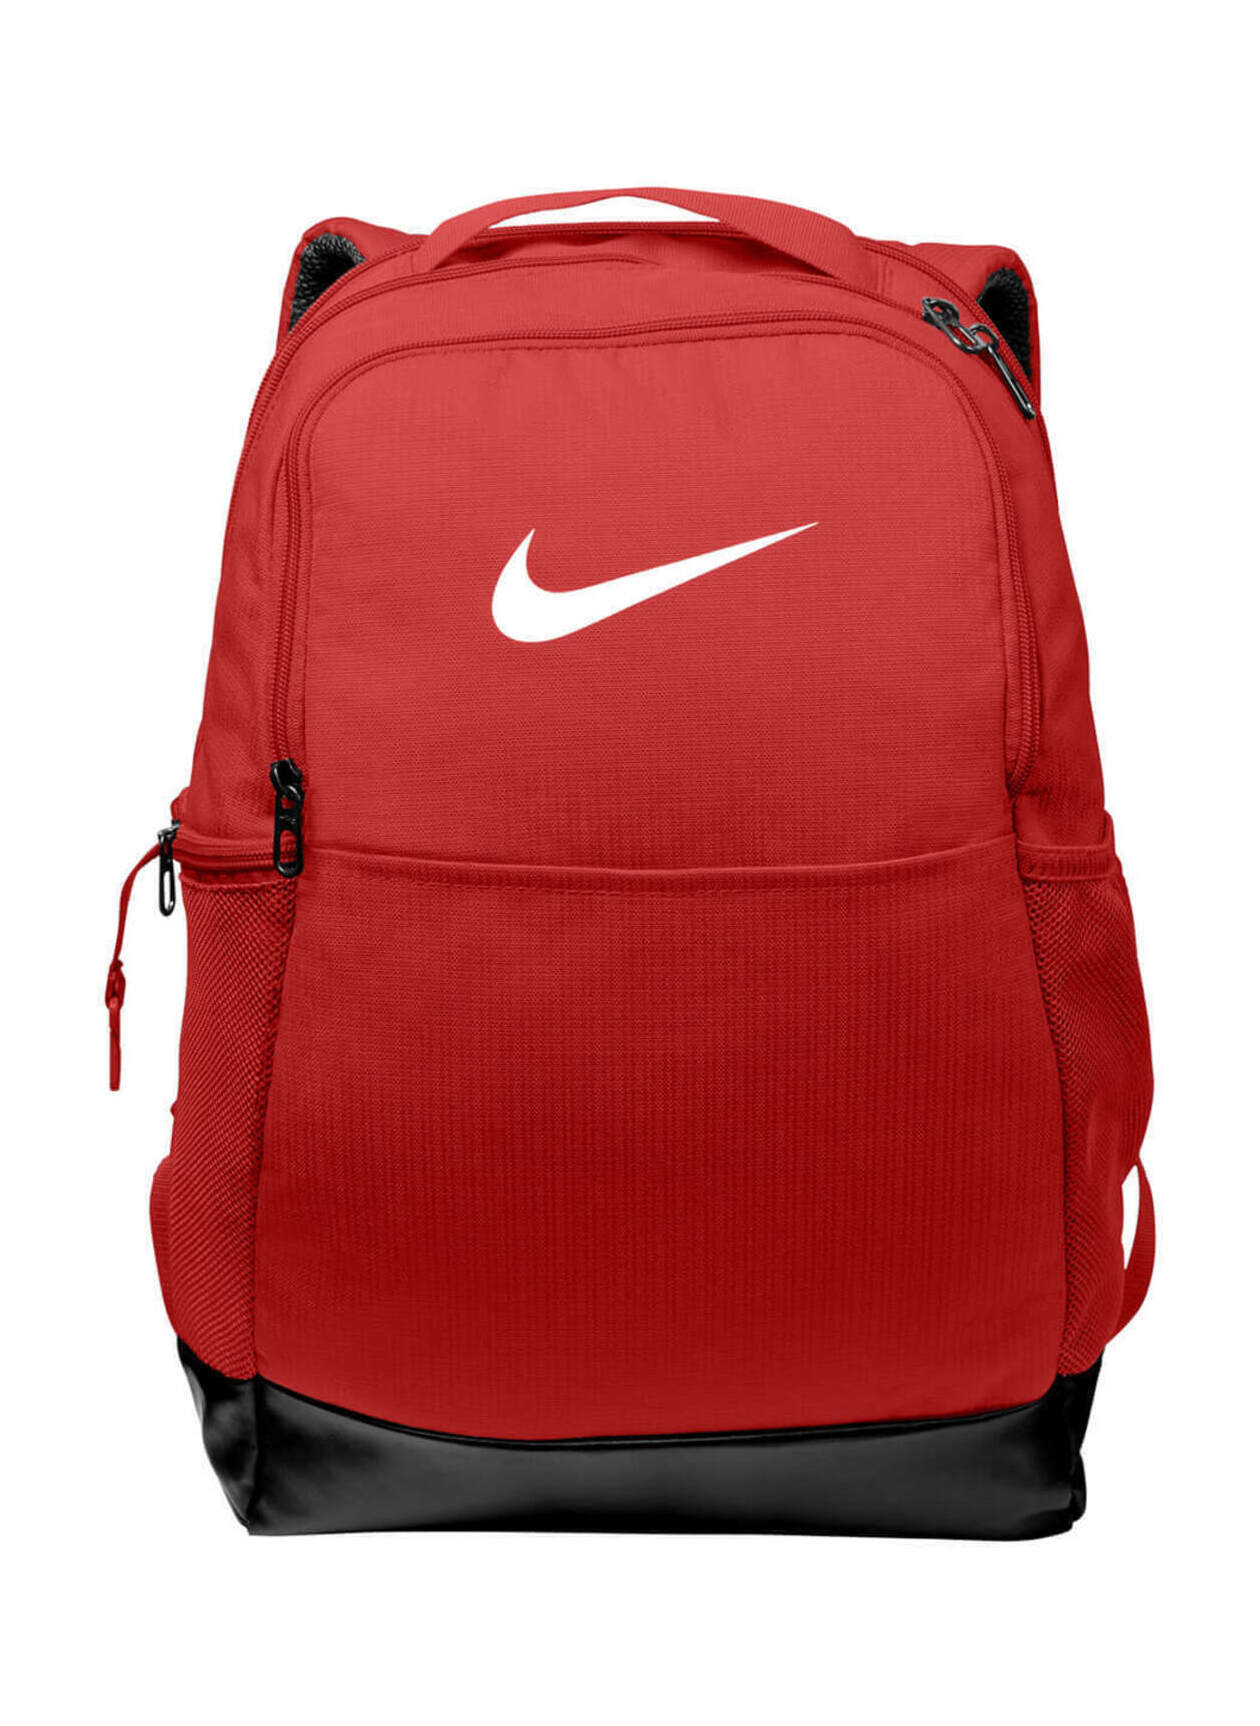 Nike Brasilia Small Duffel Gym Bag Red Crush/Black/White BA5335-618 Boys  Men's | eBay